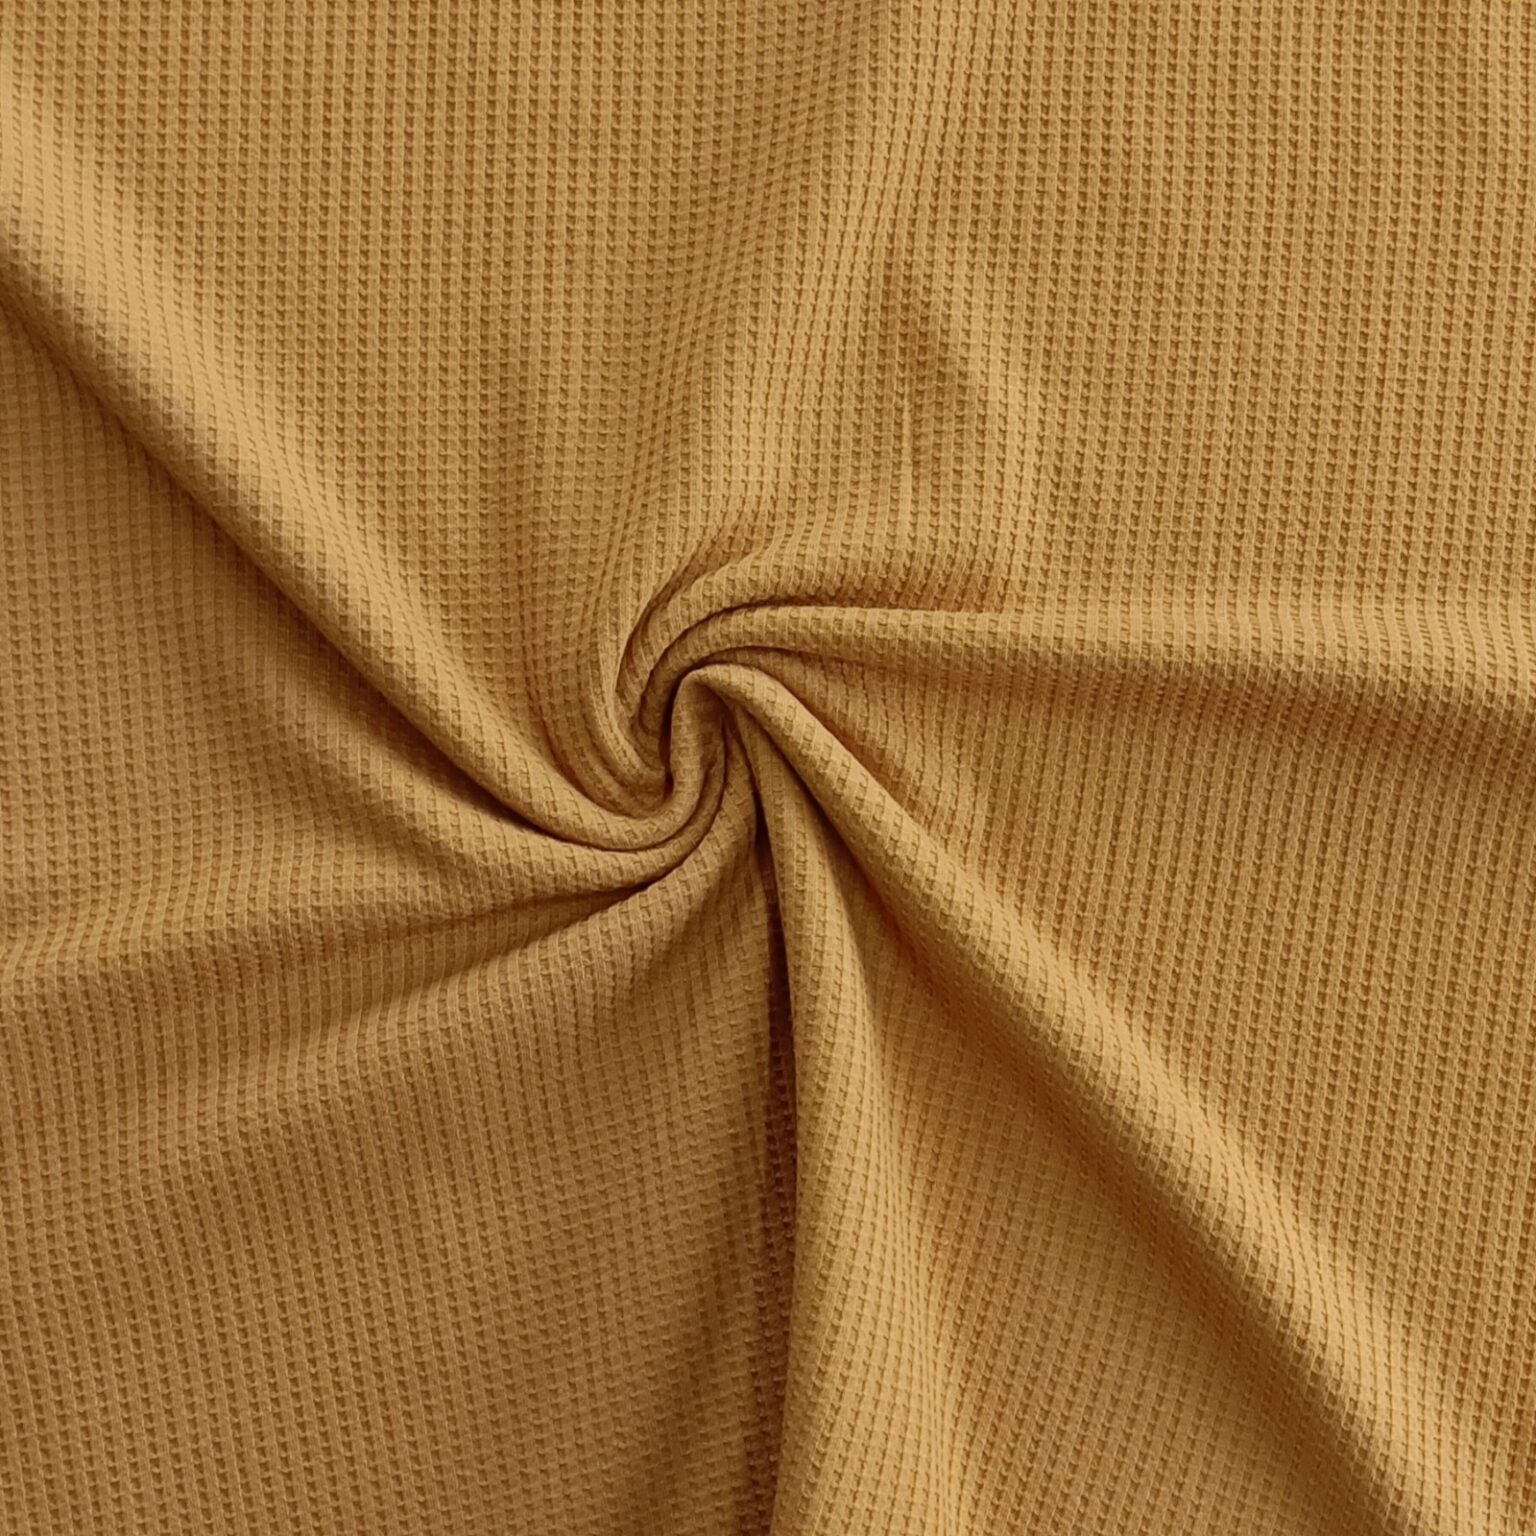 mustard waffle cotton jersey fabric | More Sewing